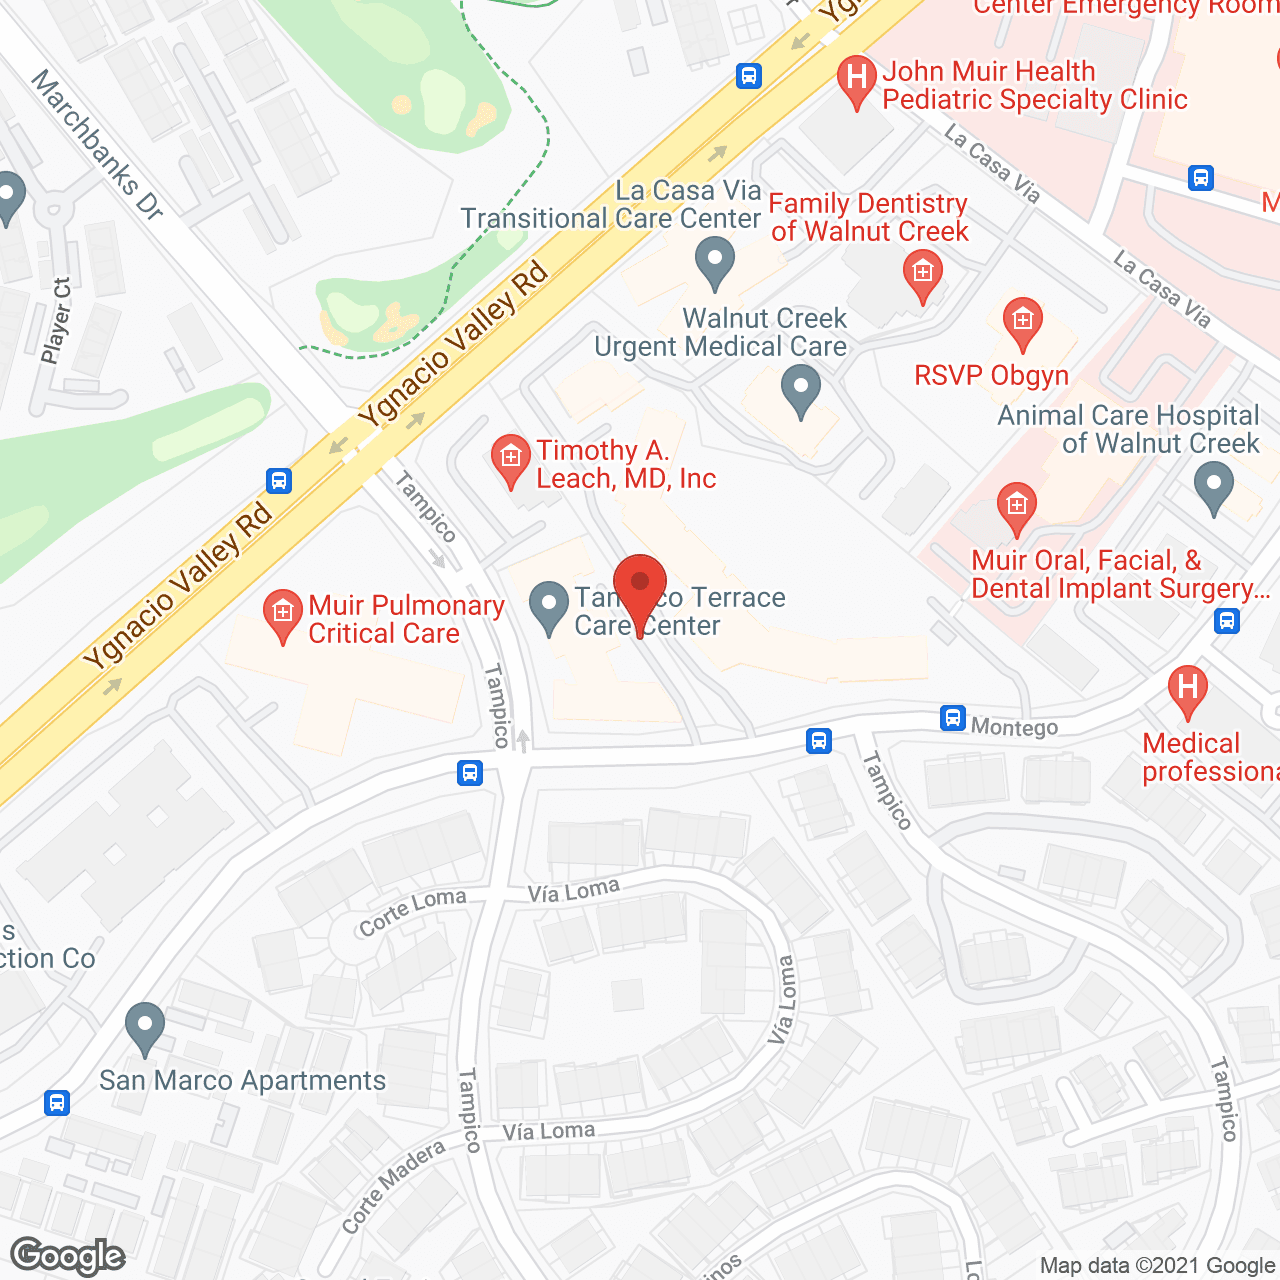 Tampico Terrace Care Center in google map